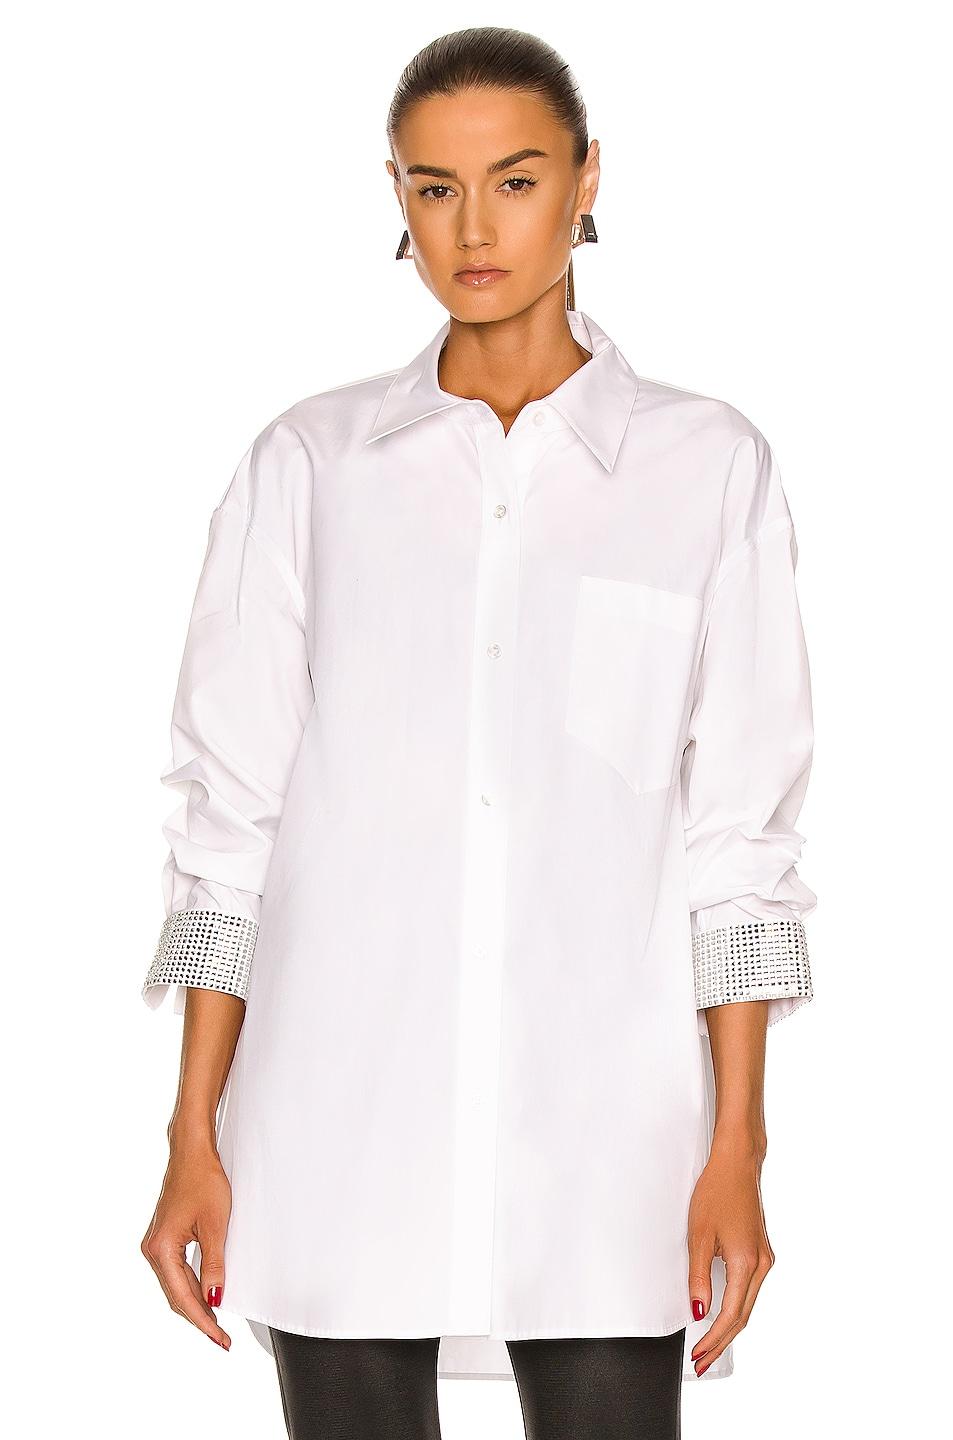 Blåt mærke Savvy Strømcelle Alexander Wang Crystal Cuff Button Down Shirt in White | Lyst